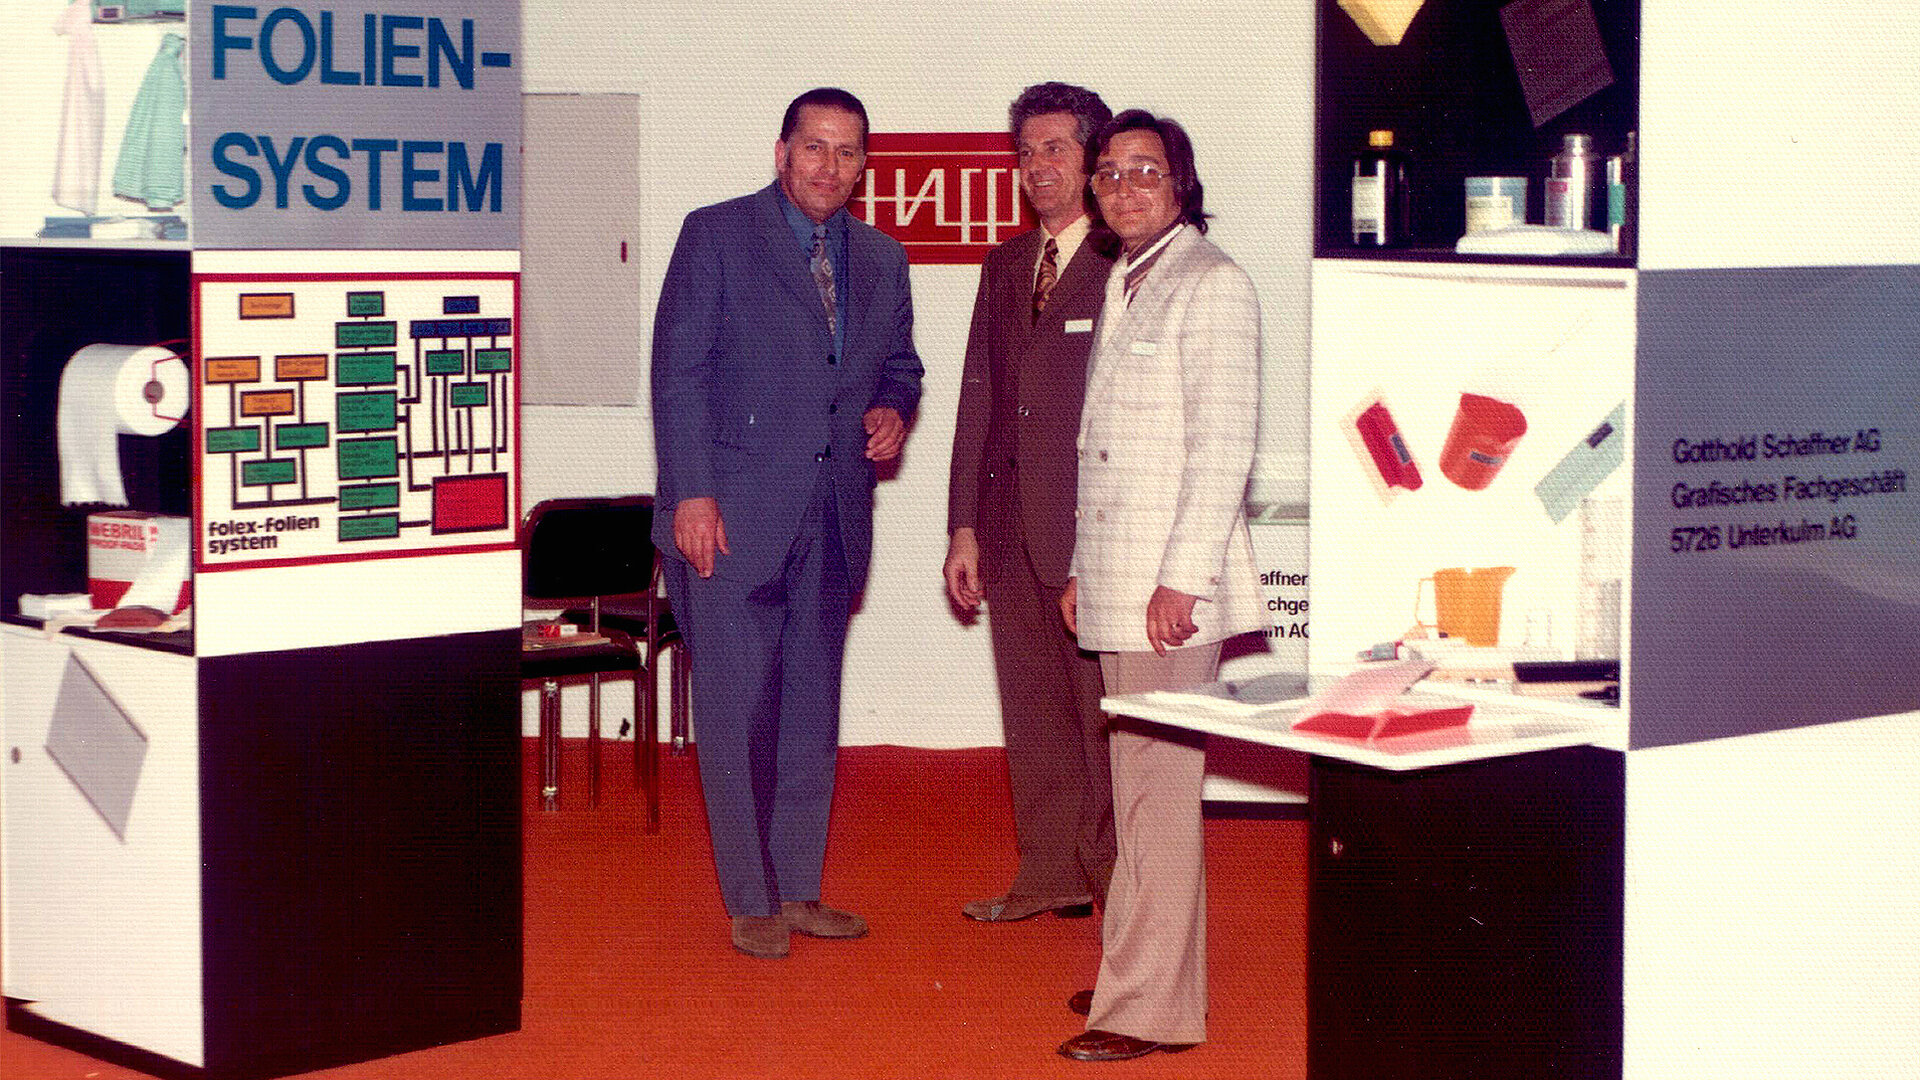 Prima presenza alla fiera di Gotthold Schaffner AG nel 1958, con Gotthold Schaffner a destra.